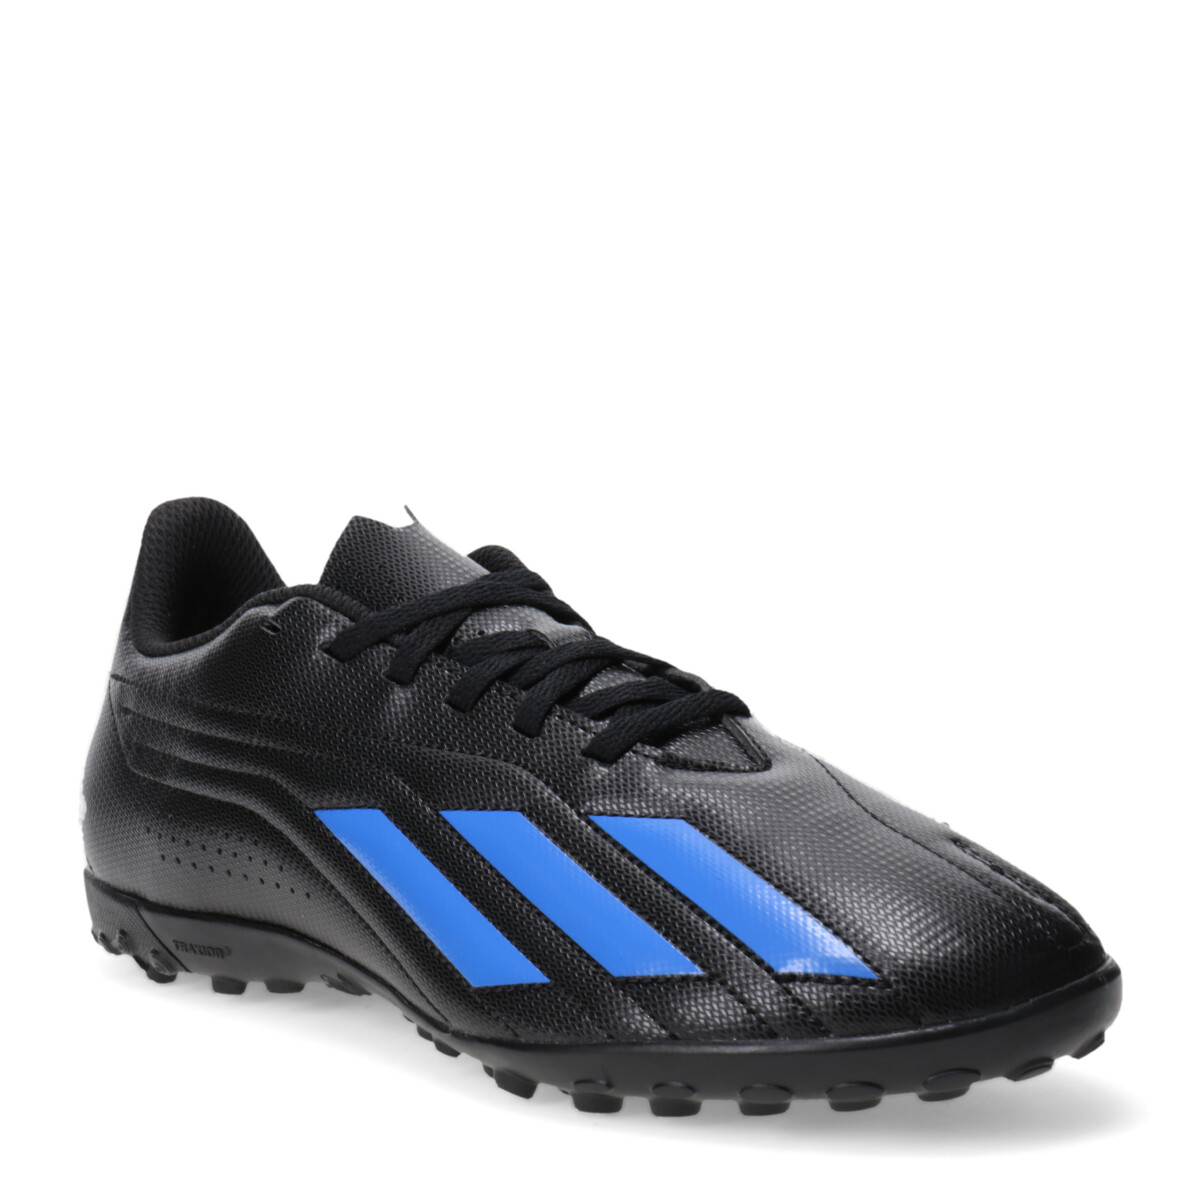 Futbol 5 II TF Adidas - Negro/Azul 